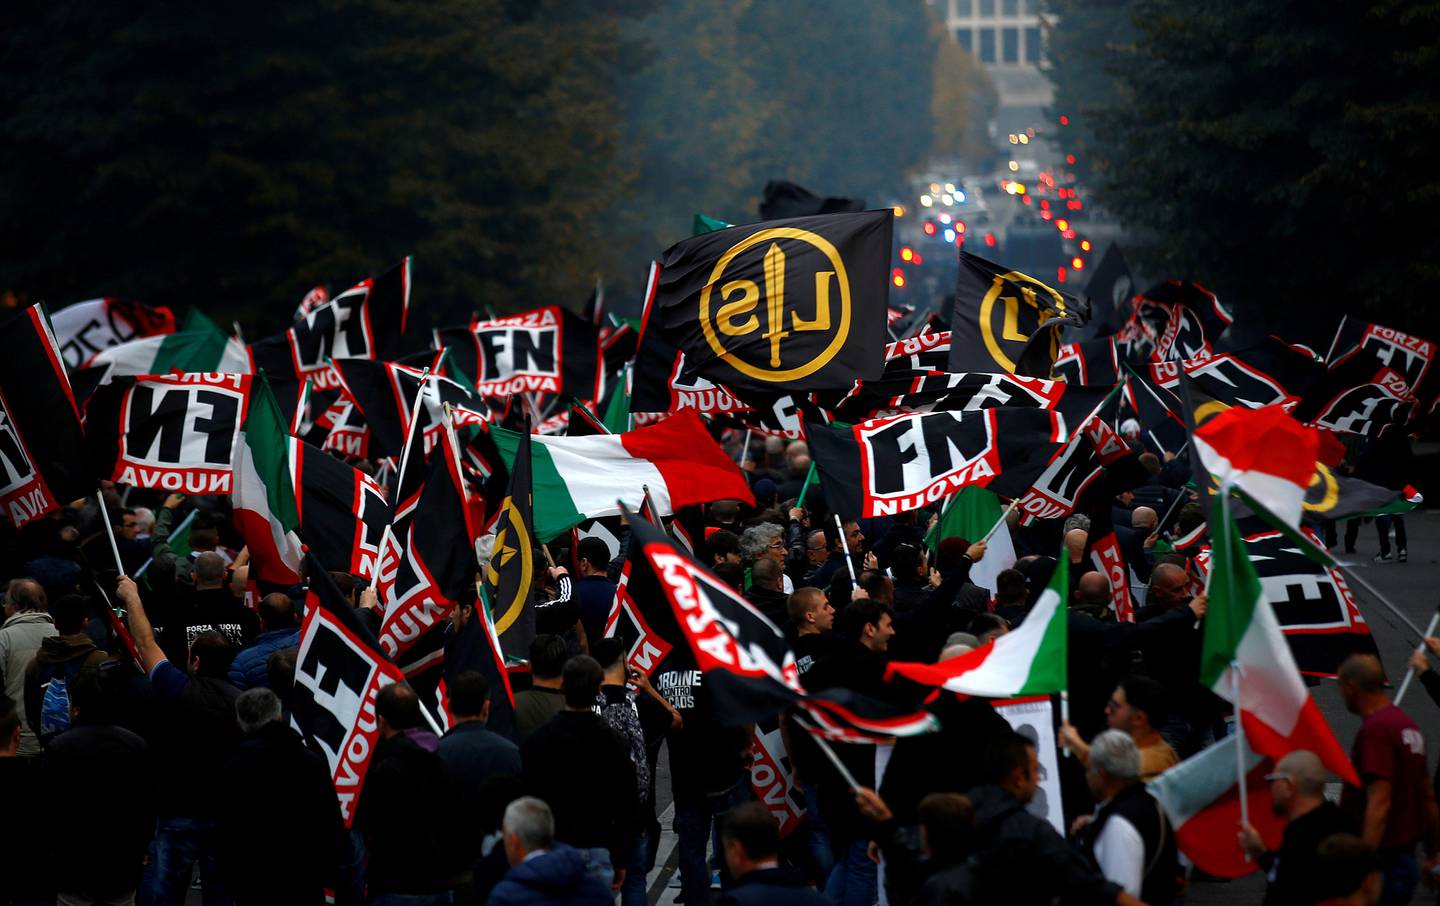 Alessia Augello was a member of Italy's far-right Forza Nuova party. Reuters